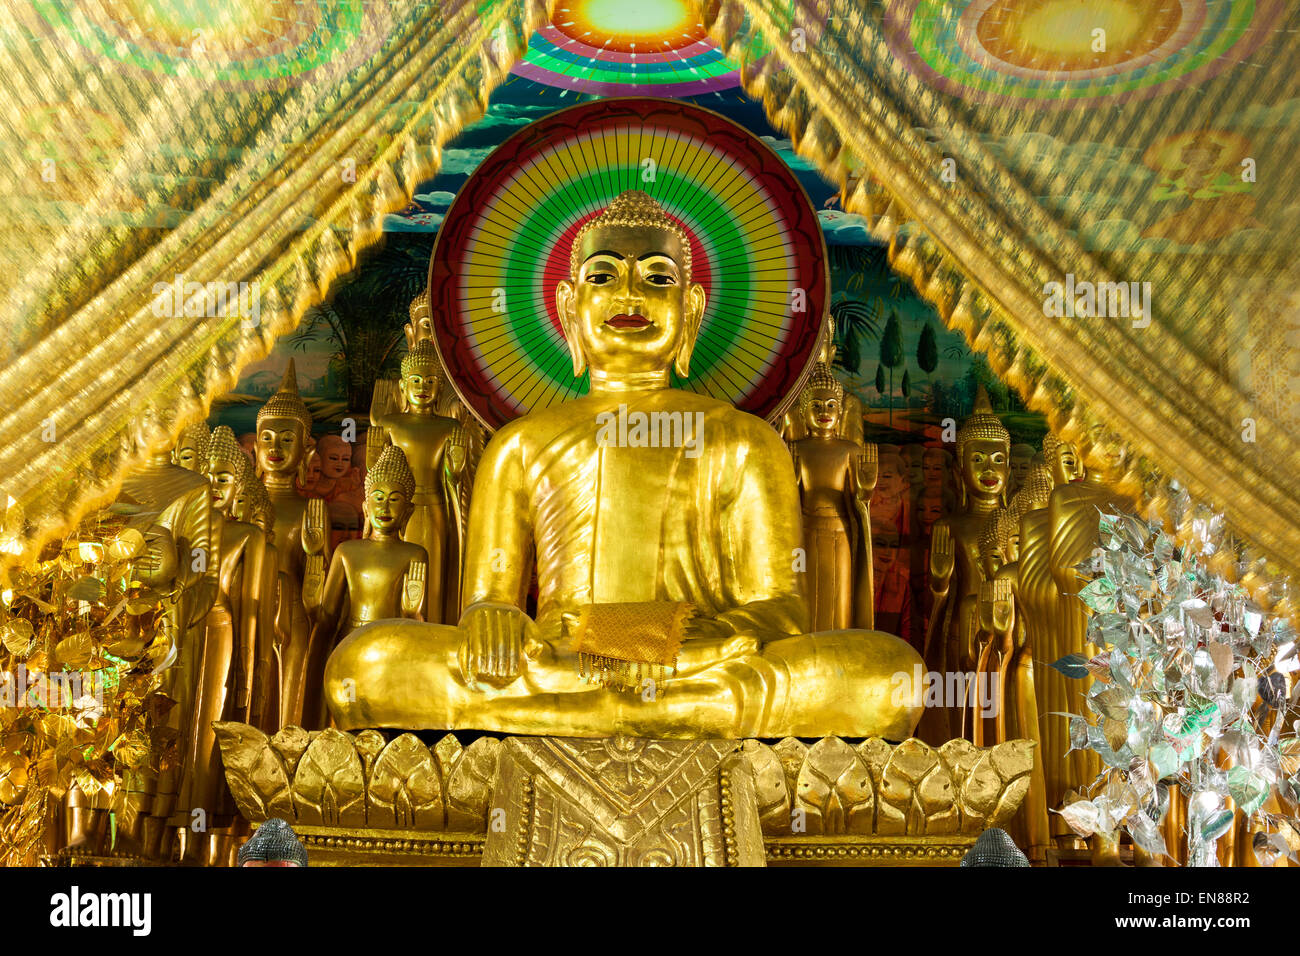 Wat Langka - Buddha statue in beautiful Buddhist temple in Phnom Penh, Cambodia, Asia. Stock Photo